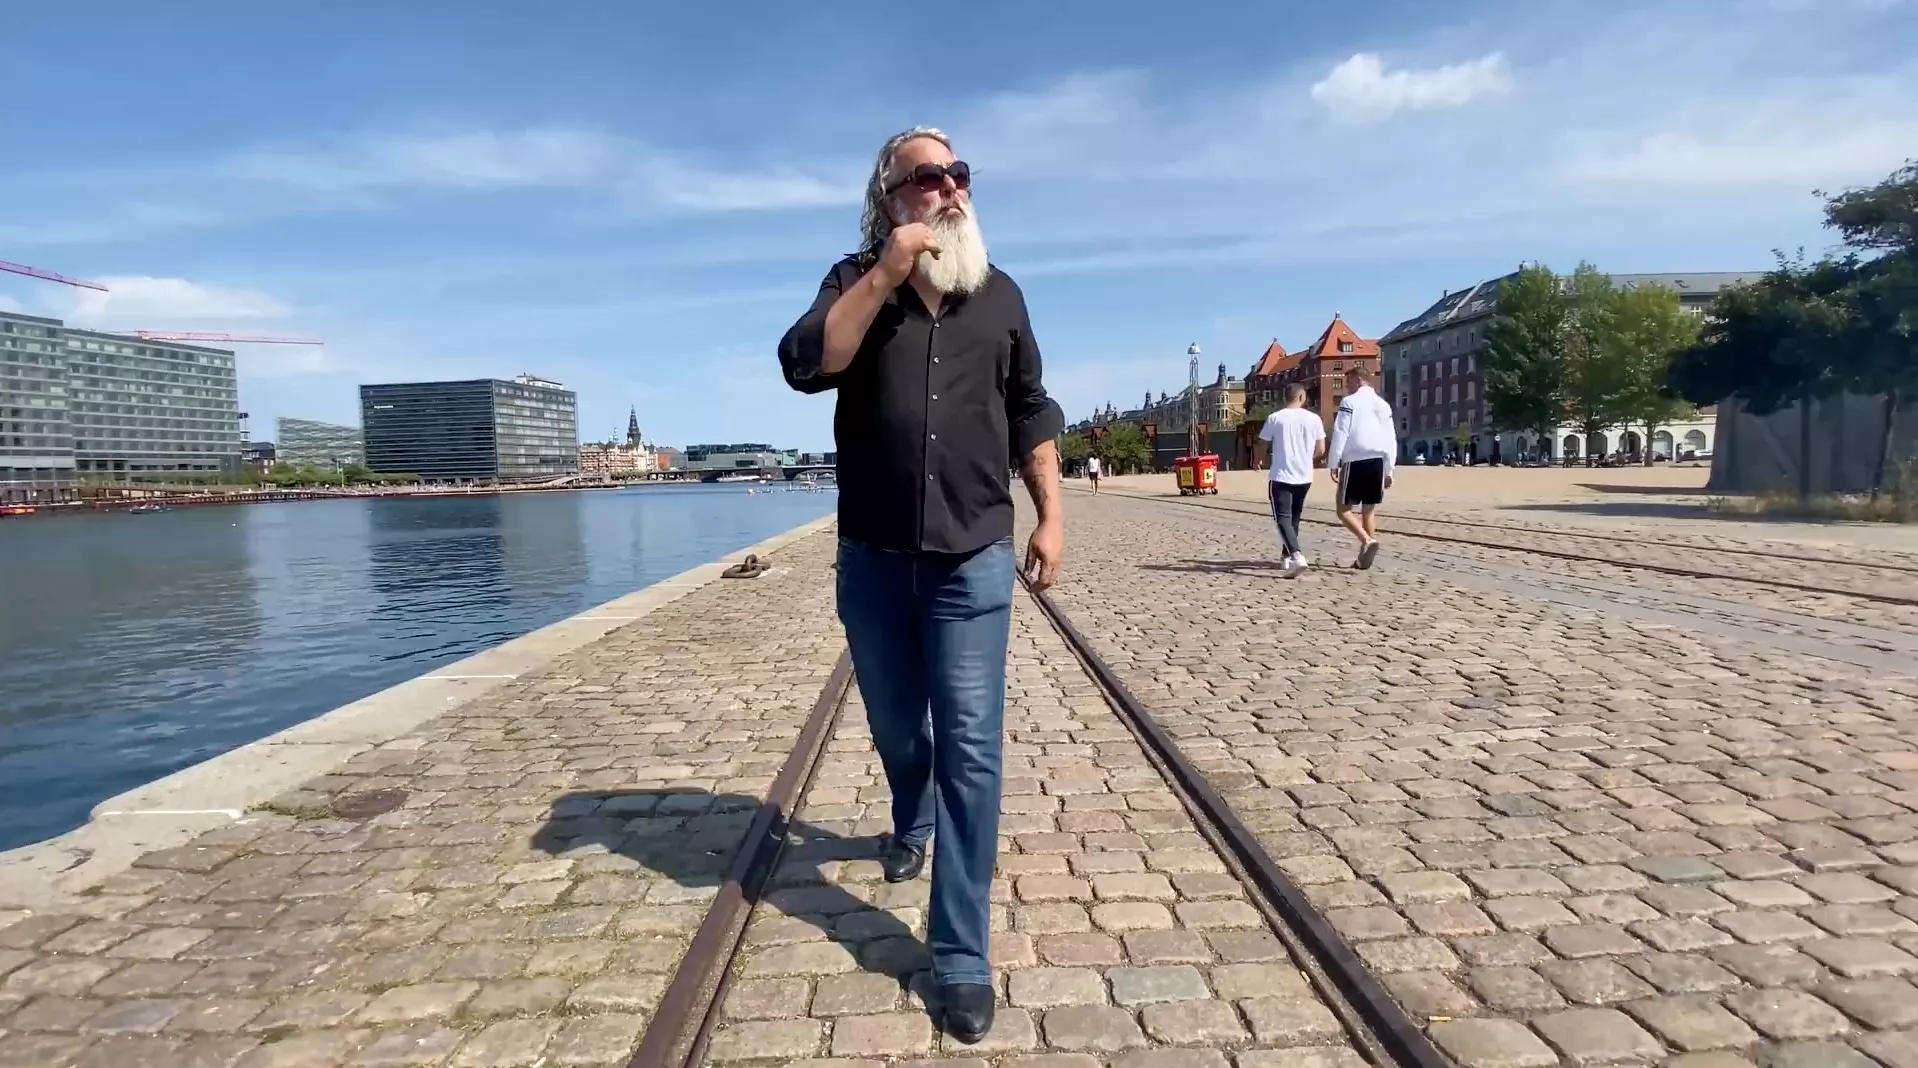 VIDEOPREMIERE: Gå "Caminoen" i København med Uffe Lorenzen